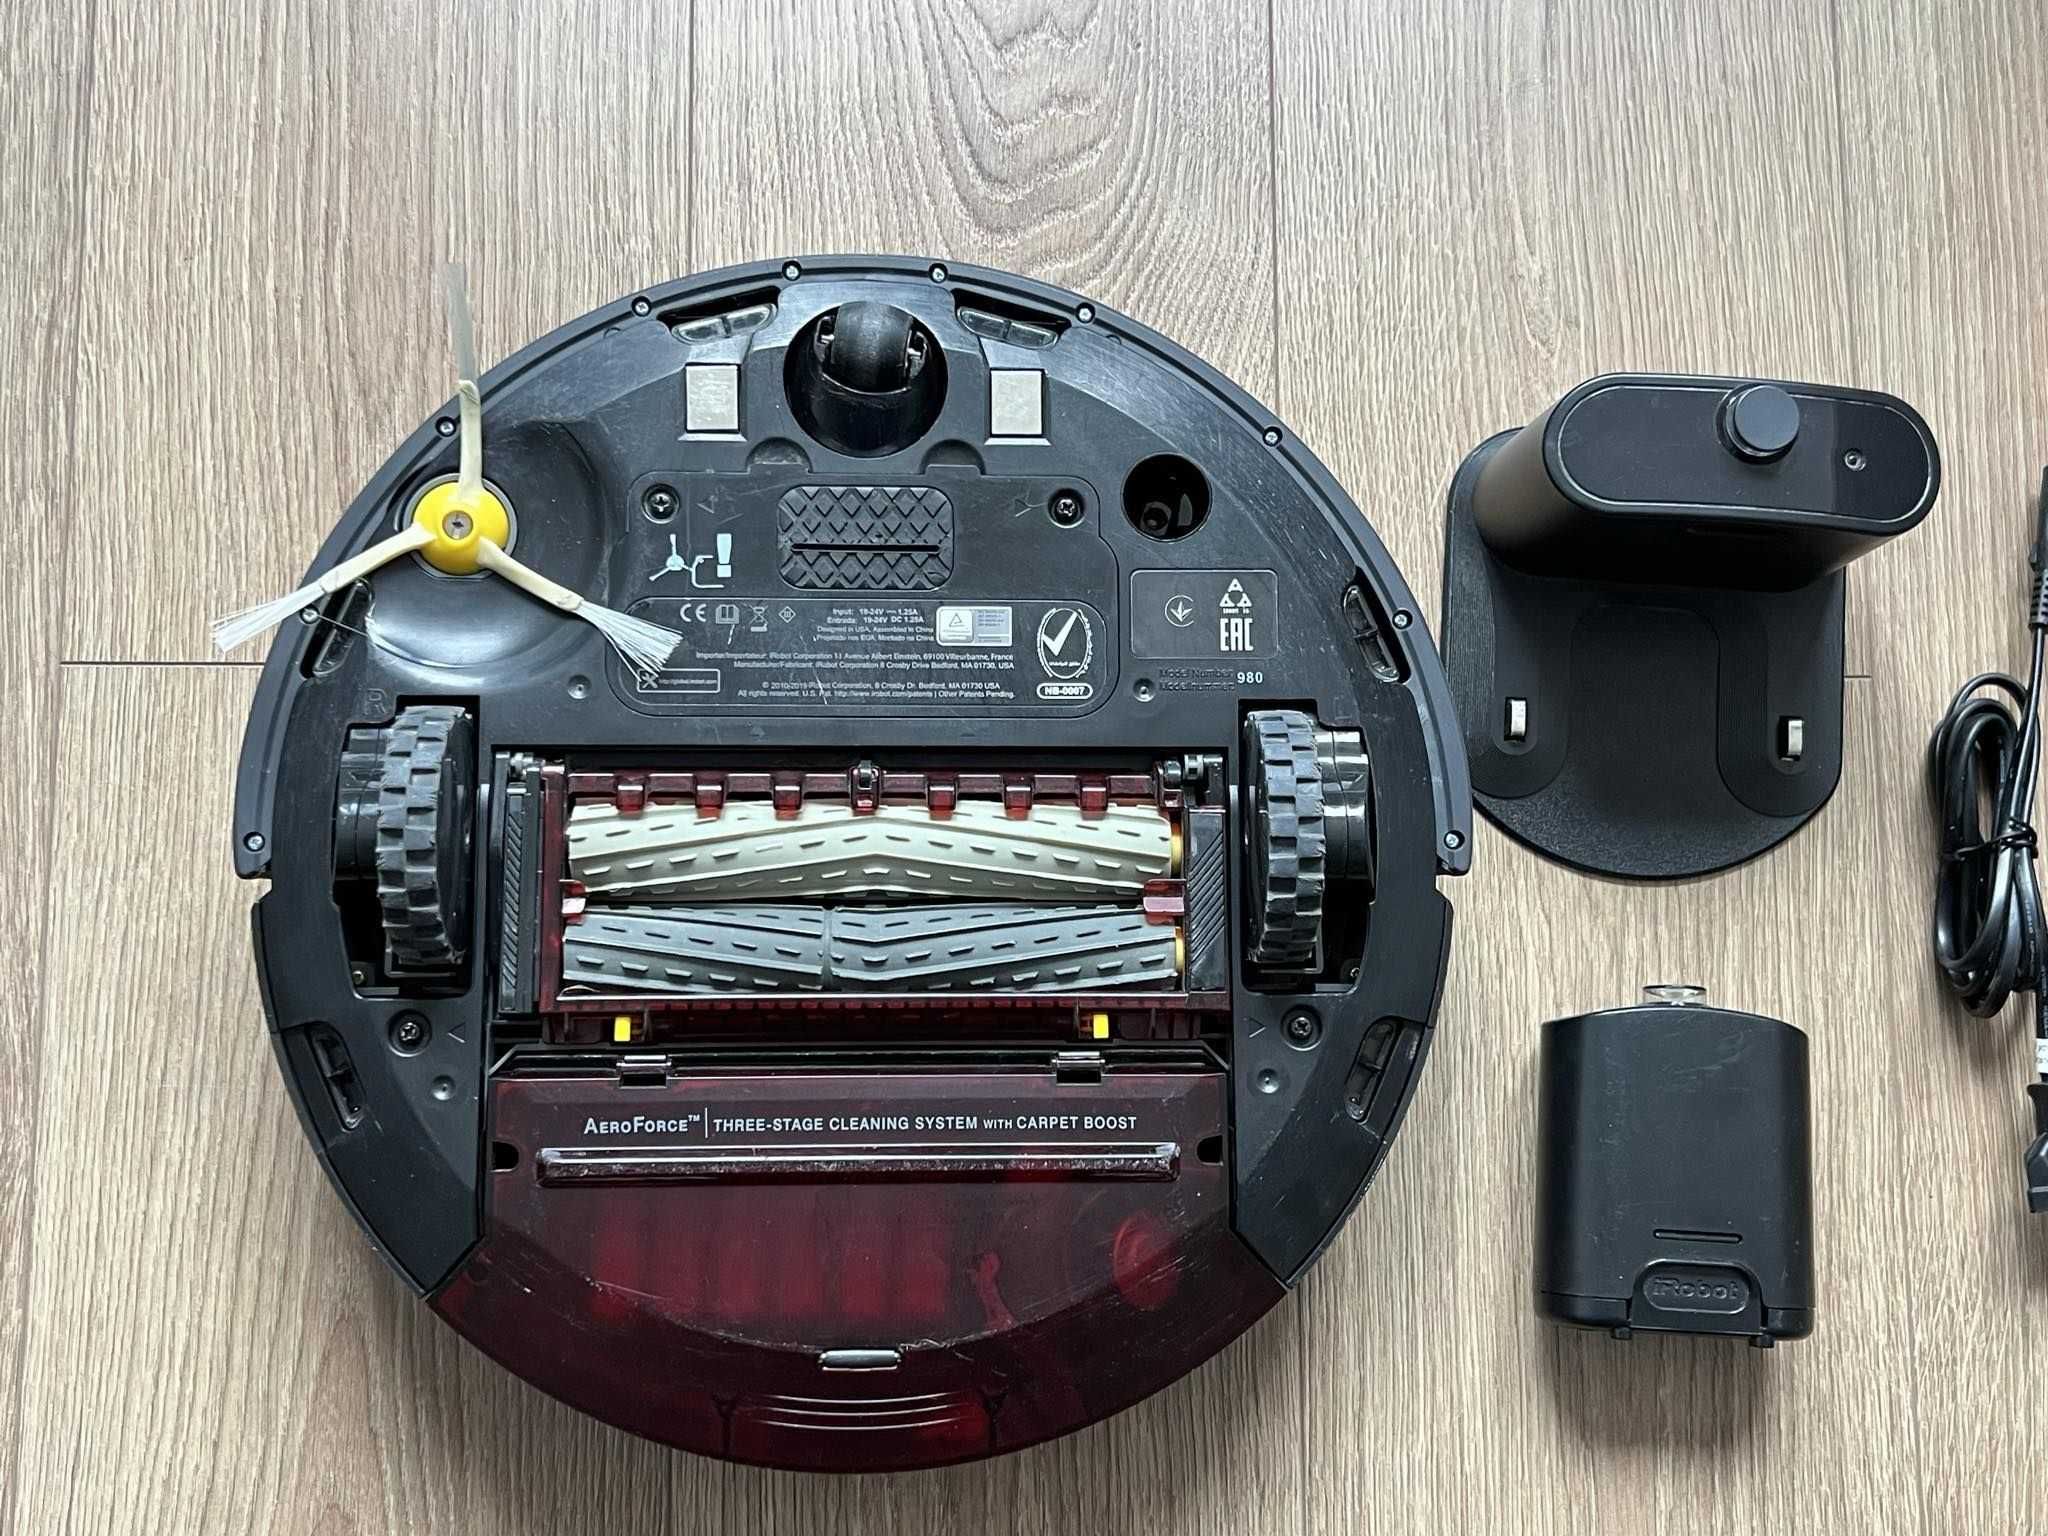 Aspirator iRobot Roomba 980, Navigare iAdapt, Carpet Boost, AeroForce